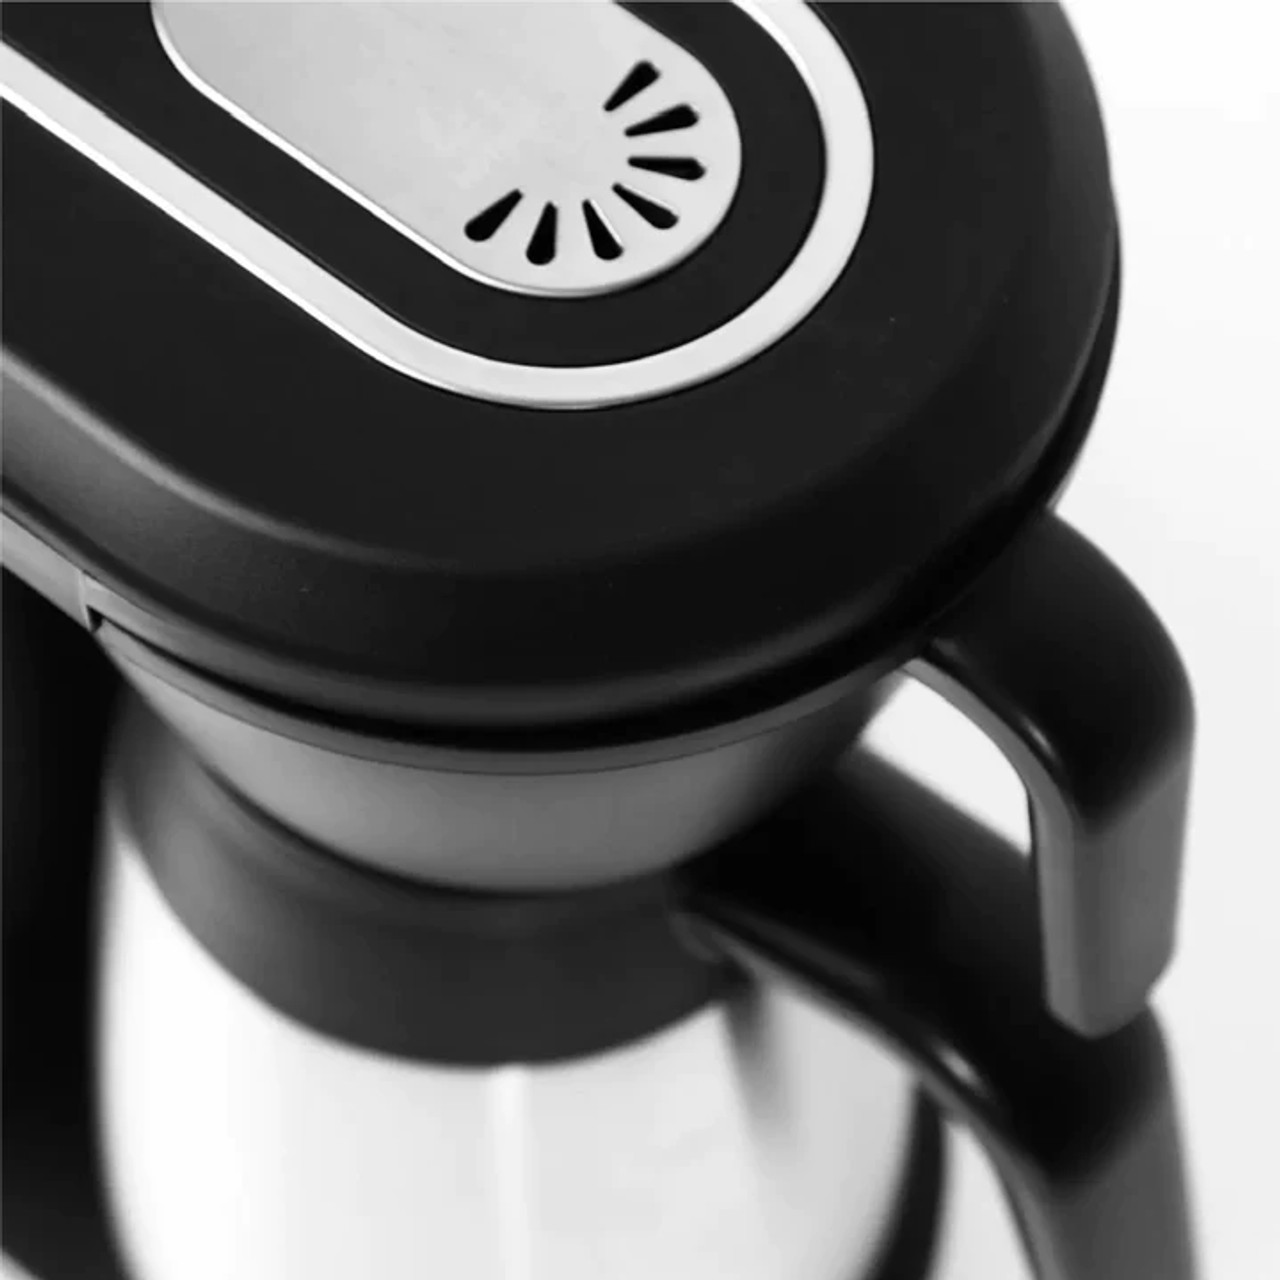 BISTRO Automatic Pour Over Coffee Machine with Thermal Carafe – Icon Vera  Demo